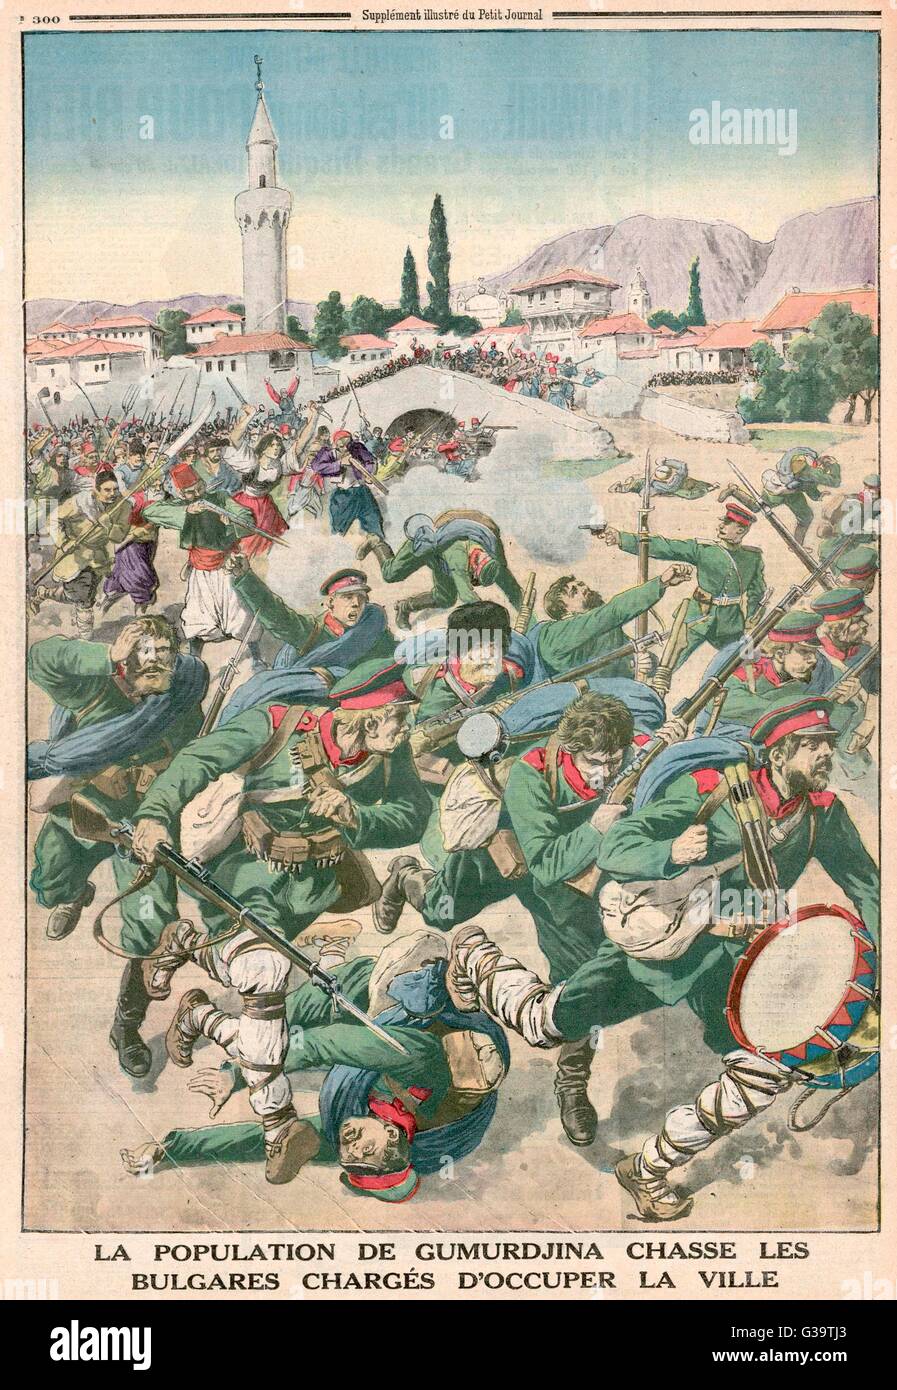 The inhabitants of Gumurdjina,  Makedonia, drive away the  invading Bulgarians        Date: September 1913 Stock Photo